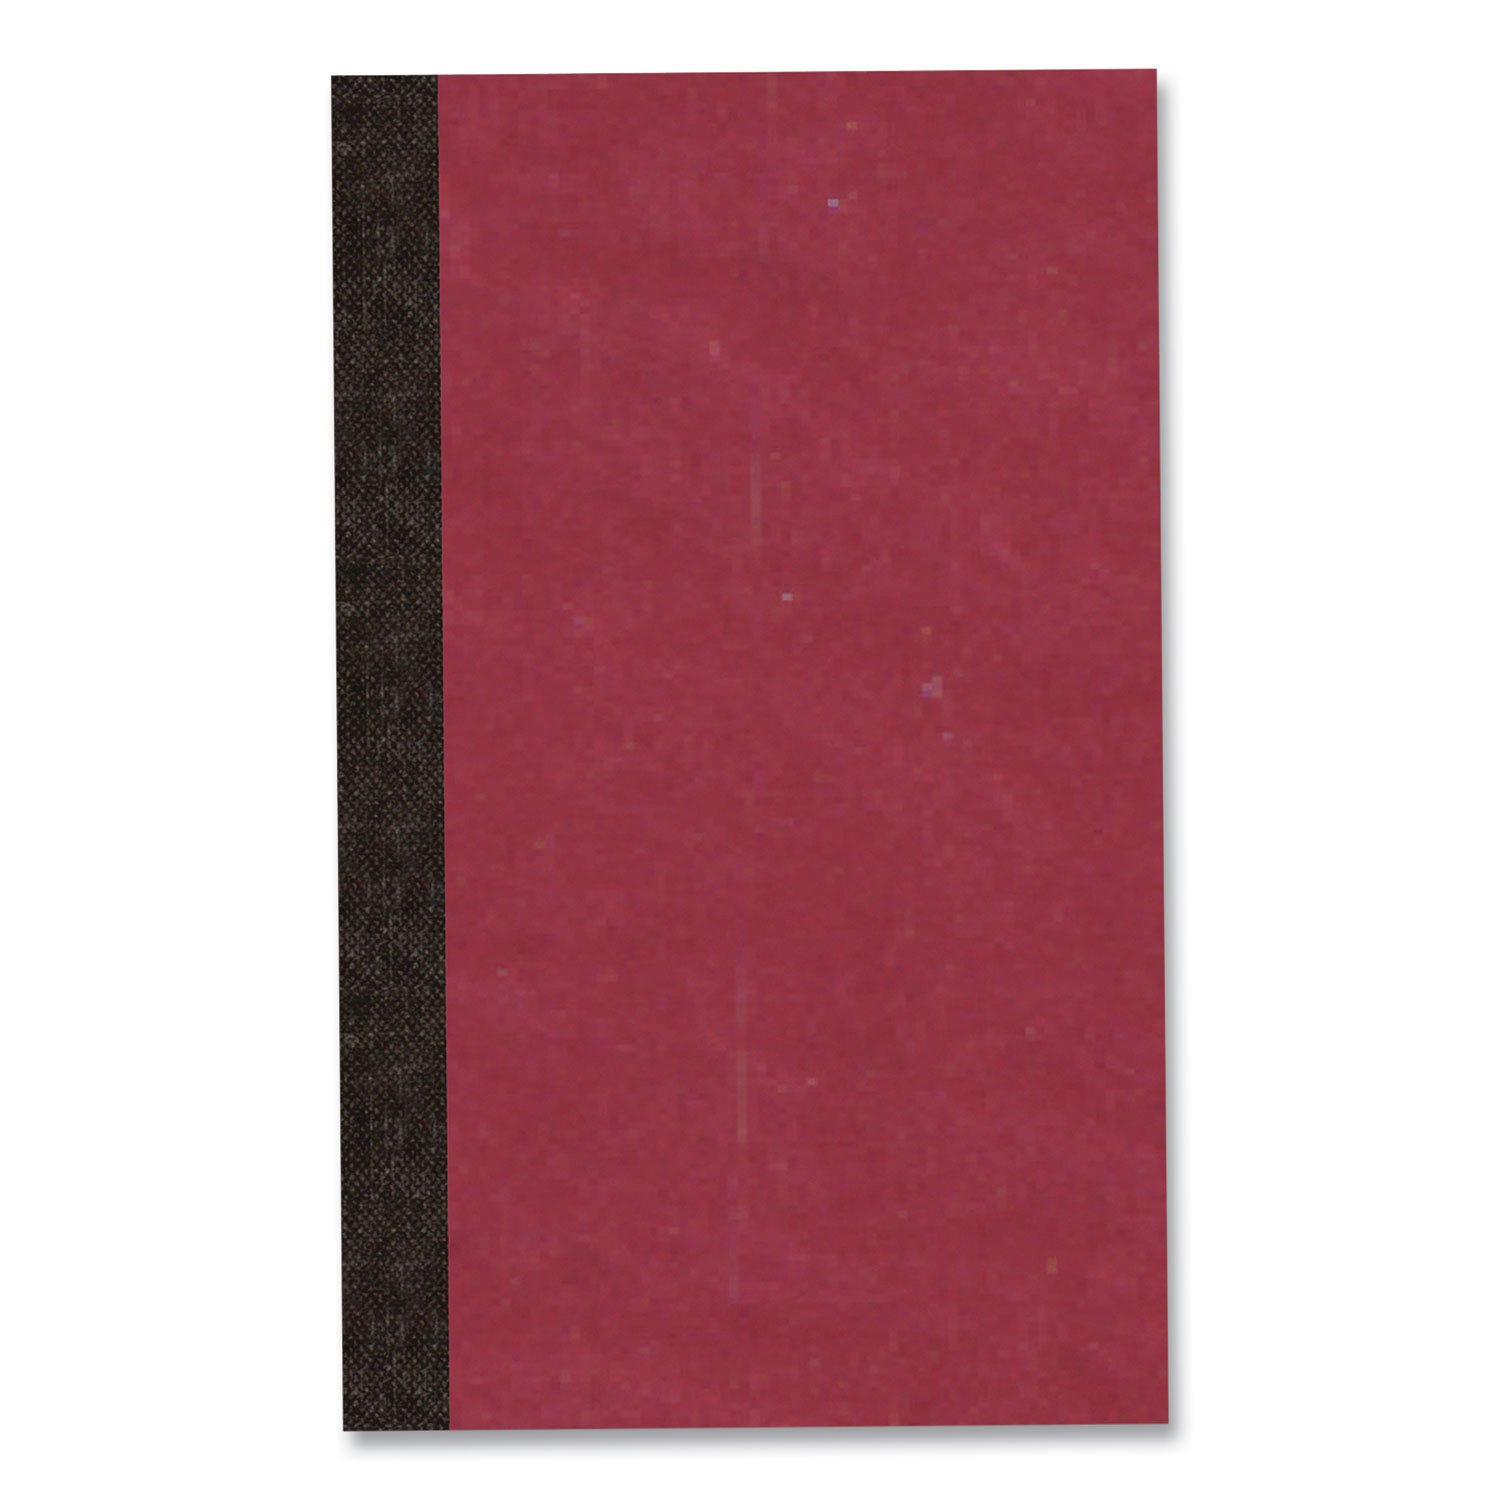 sewn-memo-book-narrow-rule-red-cover-70-6-x-375-sheets-144-carton-ships-in-4-6-business-days_roa76096cs - 2